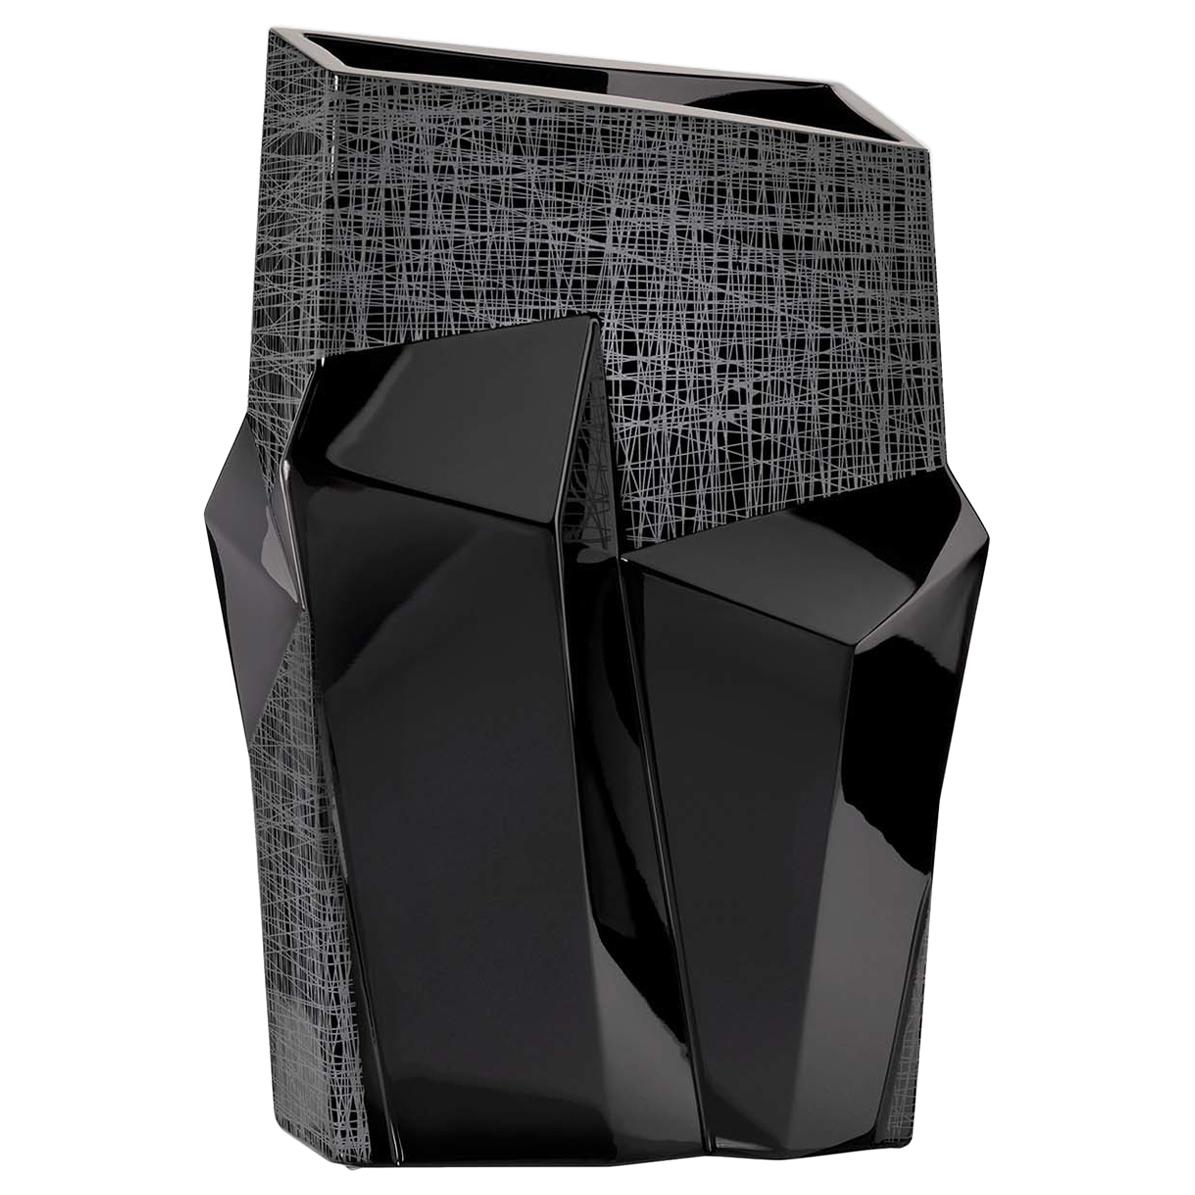 Tondo Doni Metropolis Black Vase by Mario Cioni